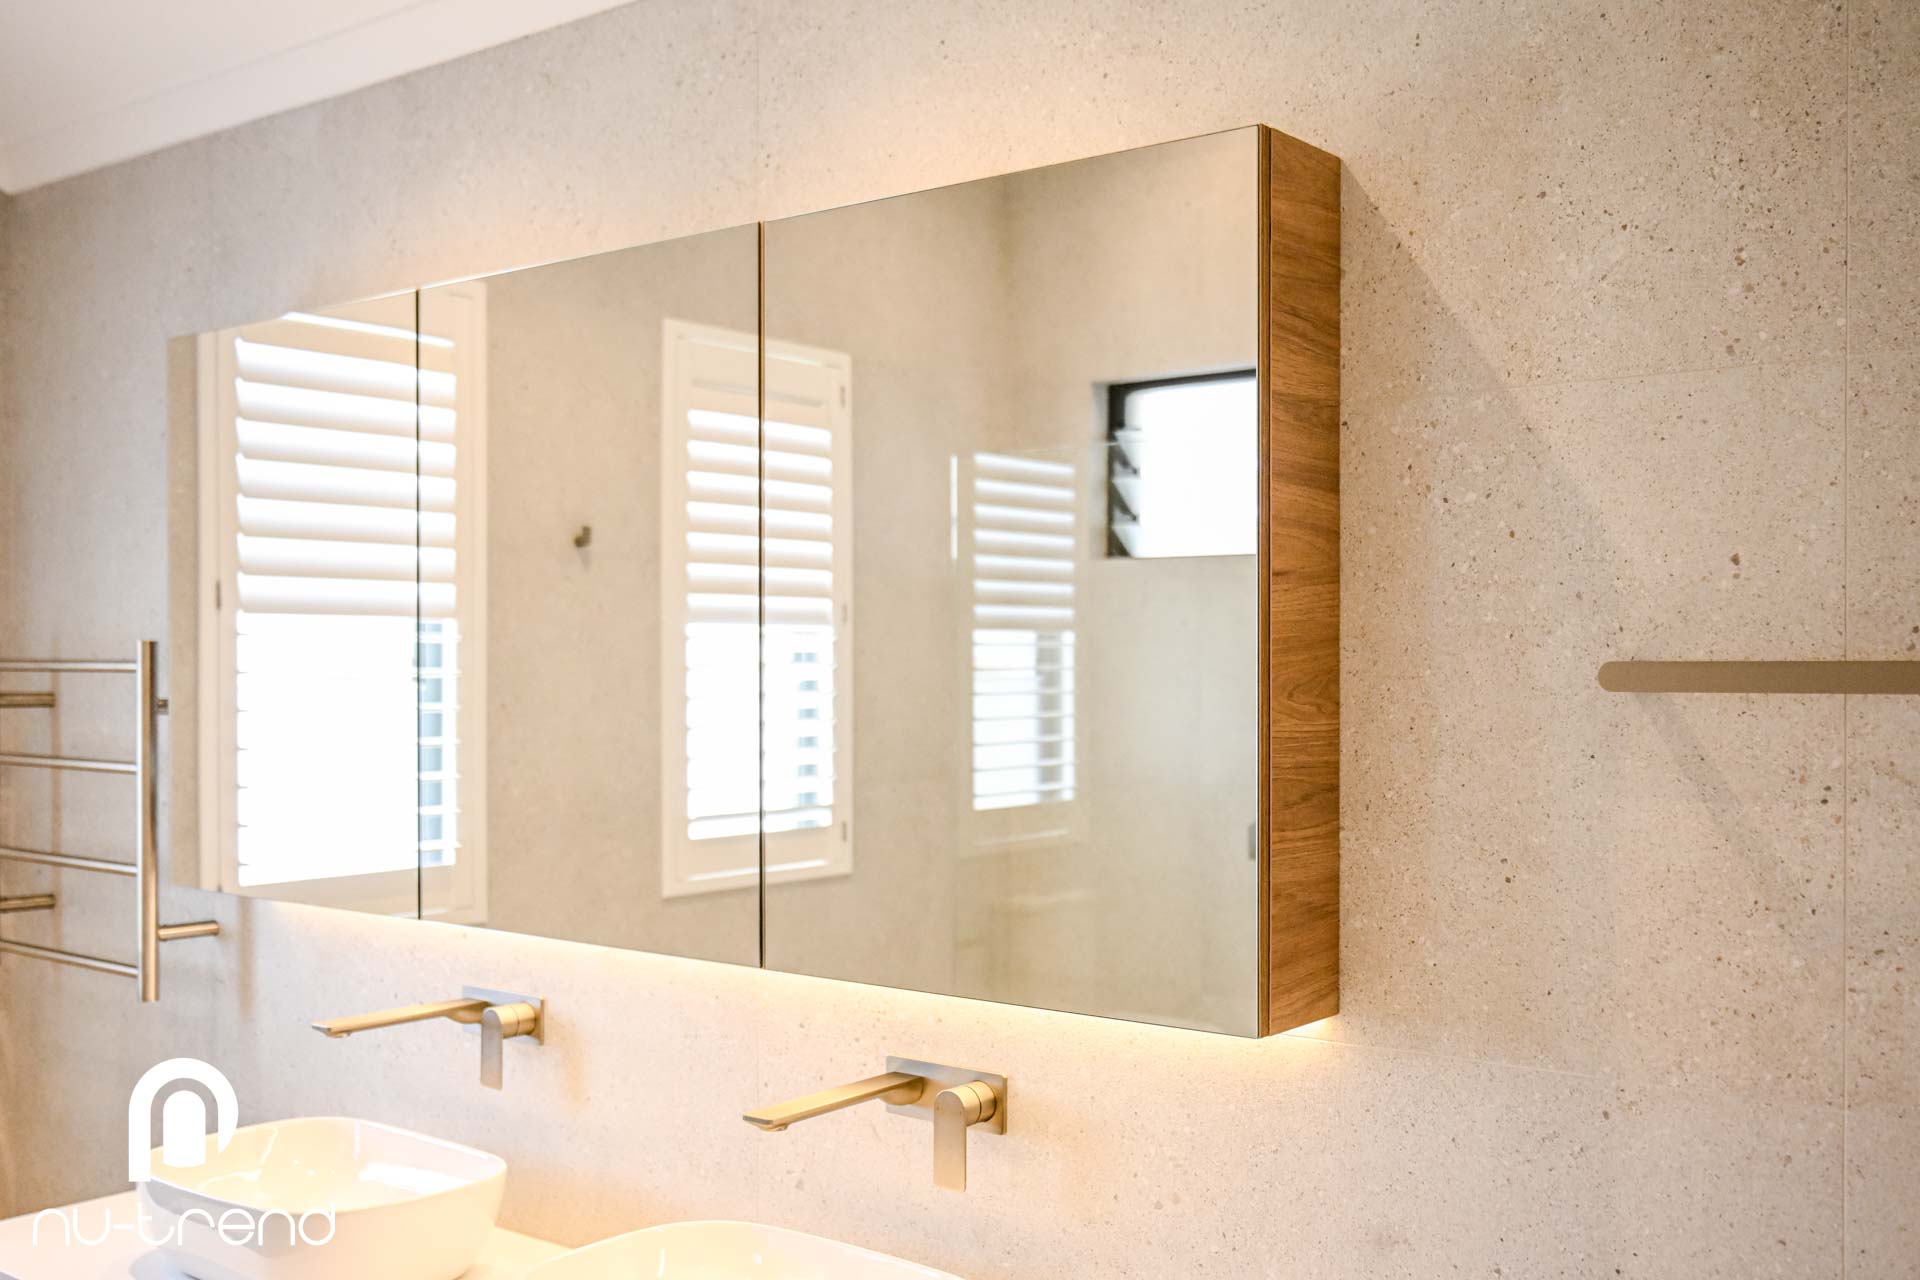 Bathroom renovation in Randwick with new mirrors